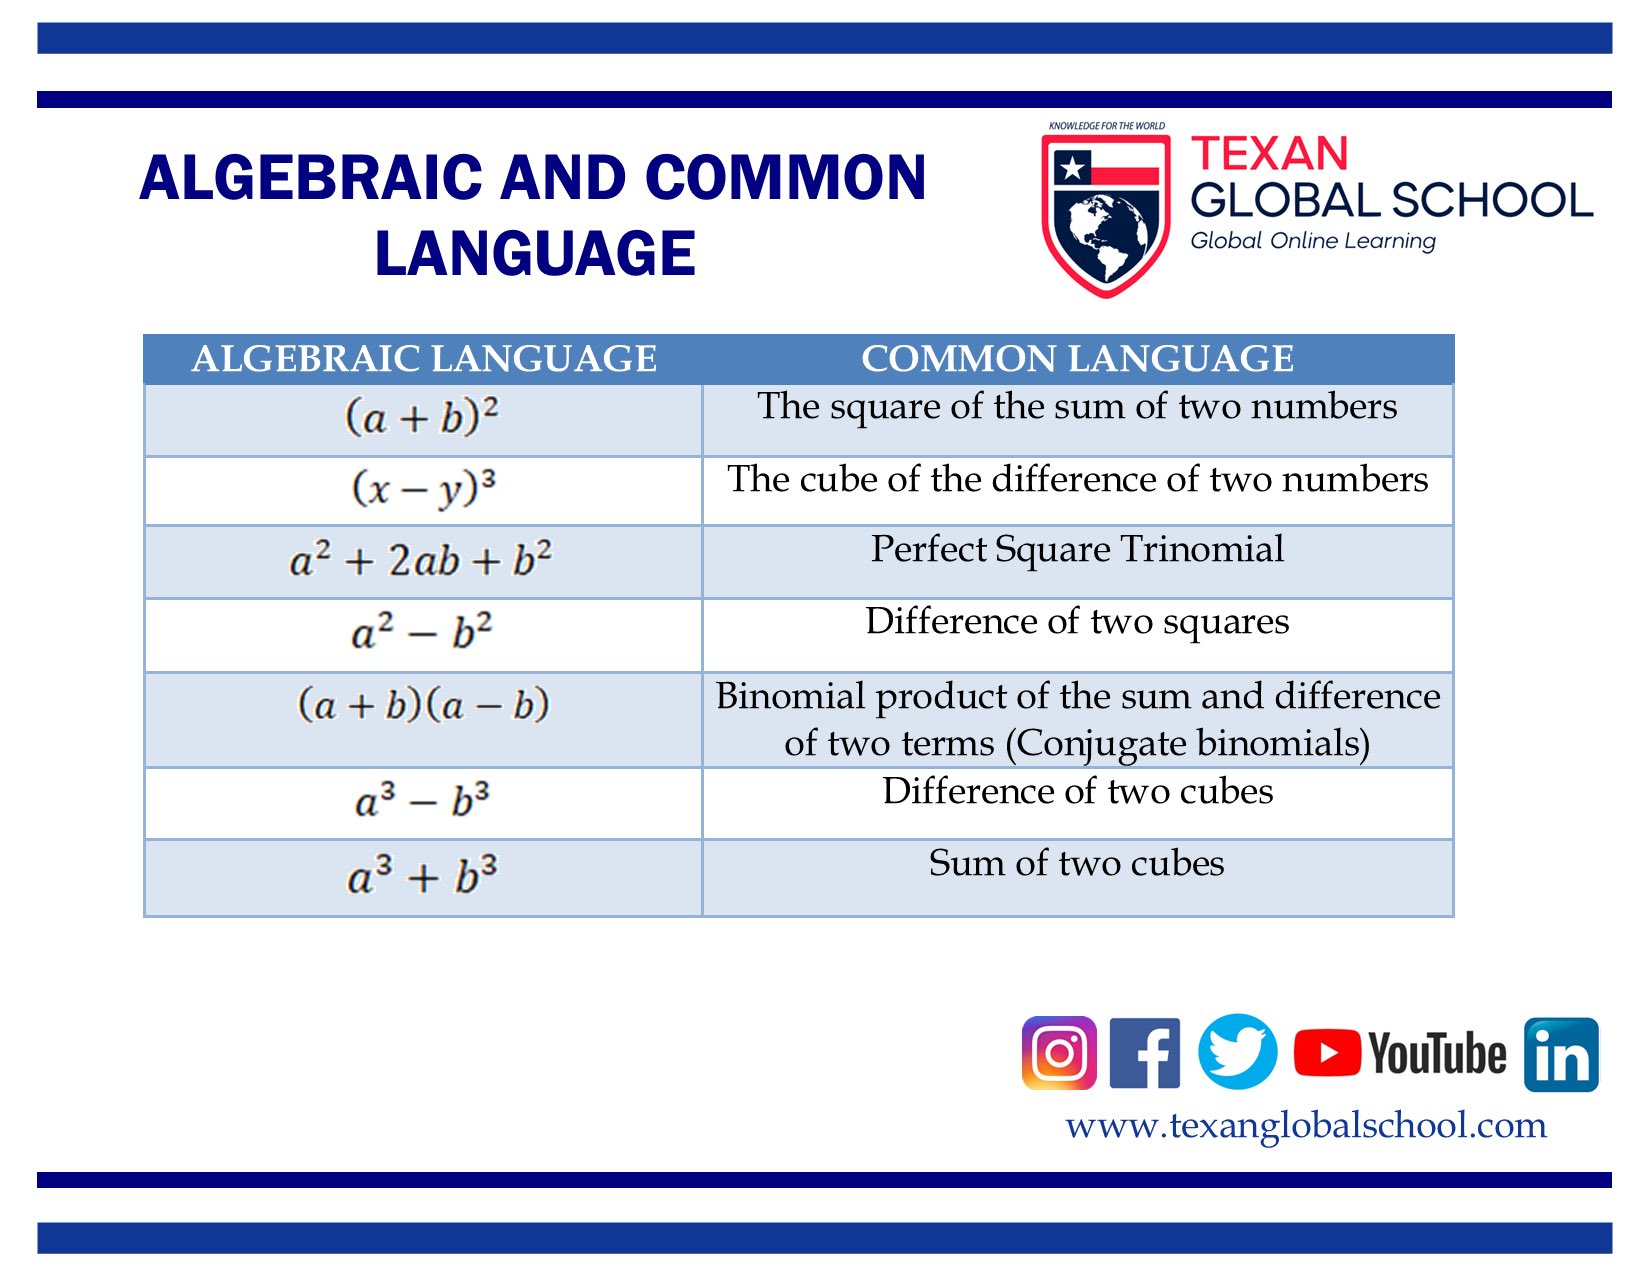 Algebraic and Common Language 1